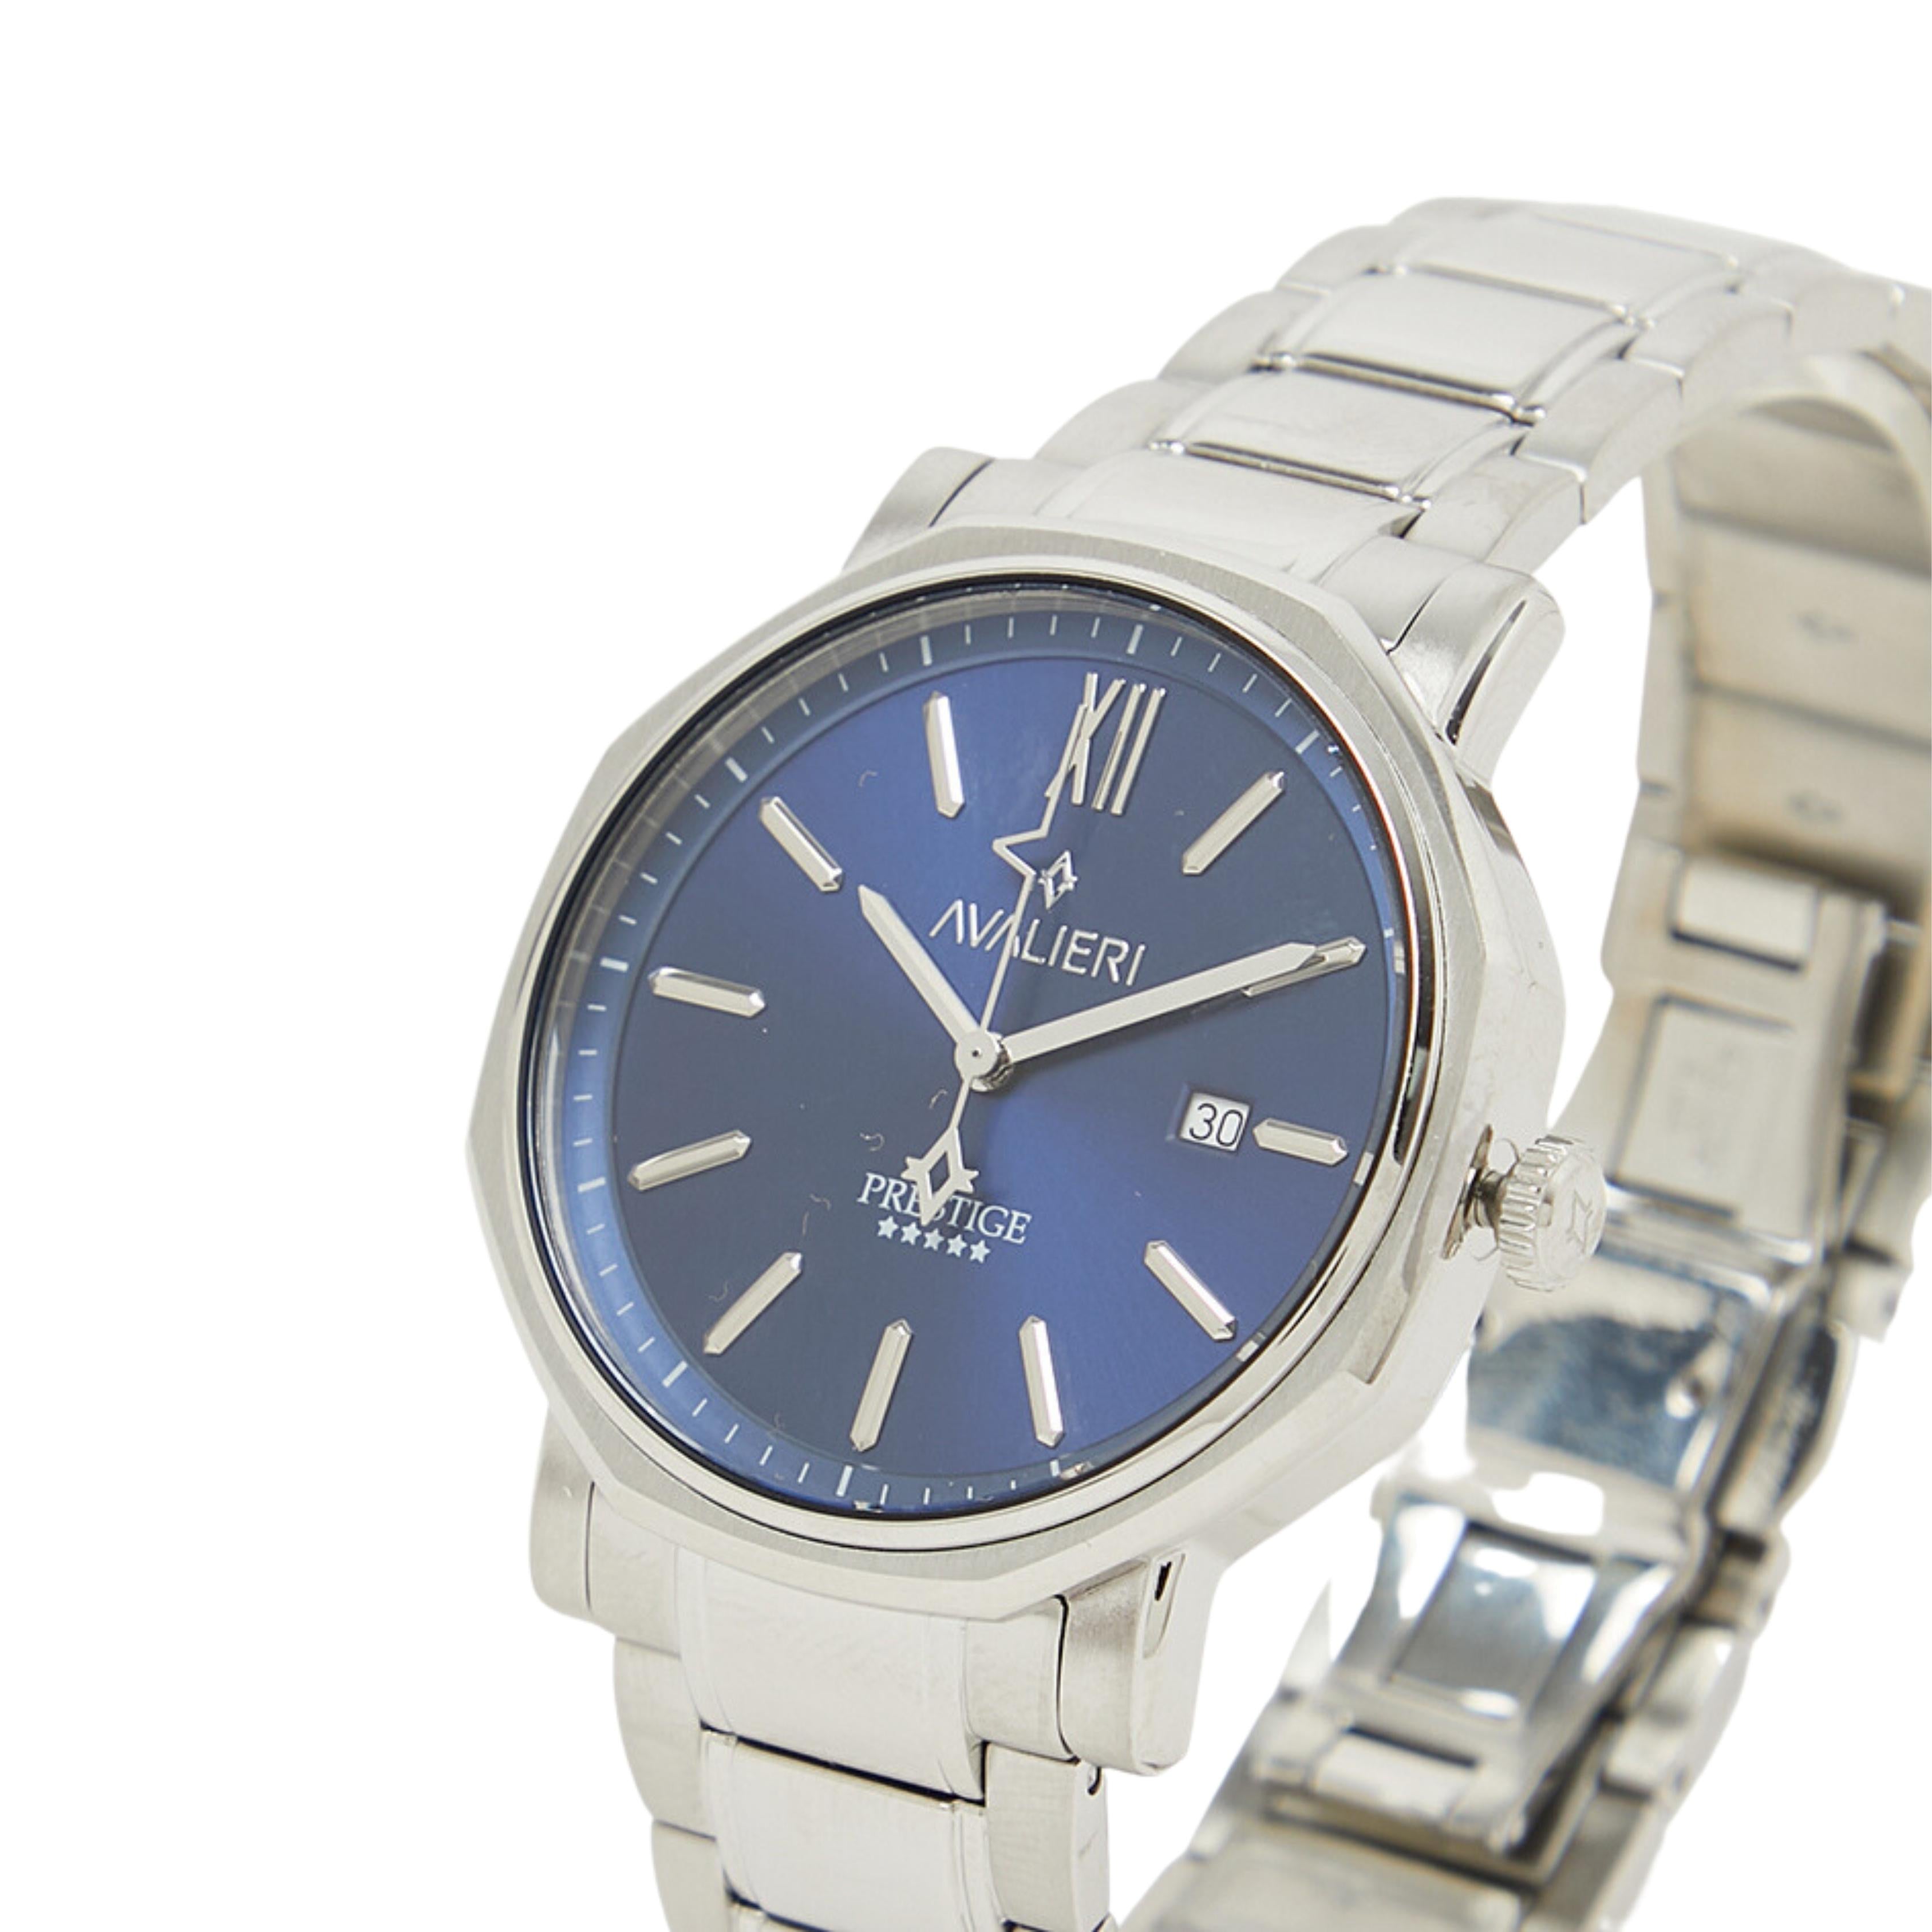 Avalieri Prestige Men's Quartz Blue Dial Watch - AP-0144